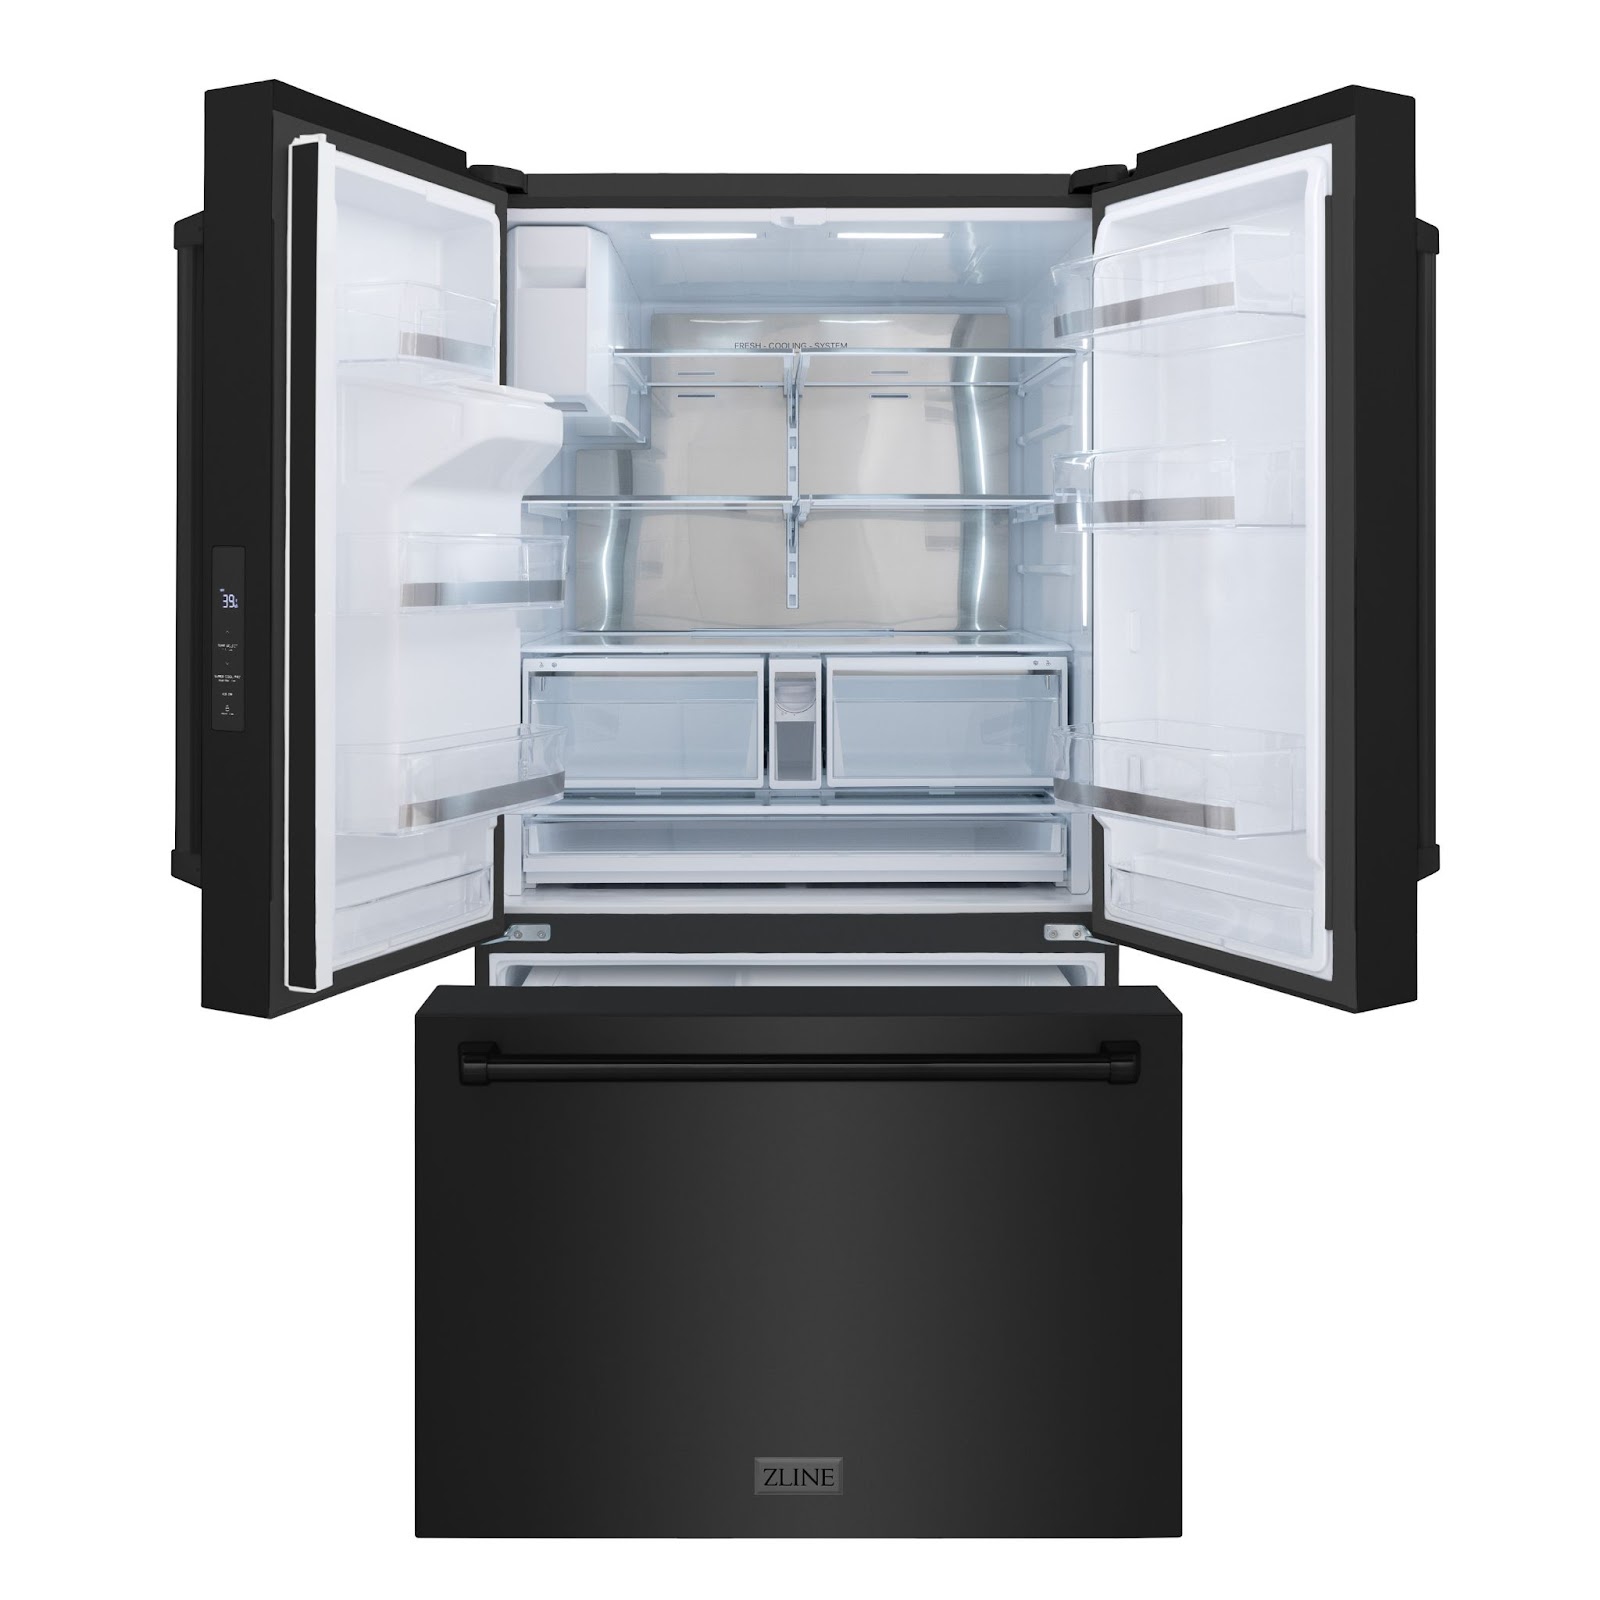 ZLINE Standard-Depth Refrigerators with Dual Ice Maker in Black Stainless Steel (RSM-W-36-BS)-White Background